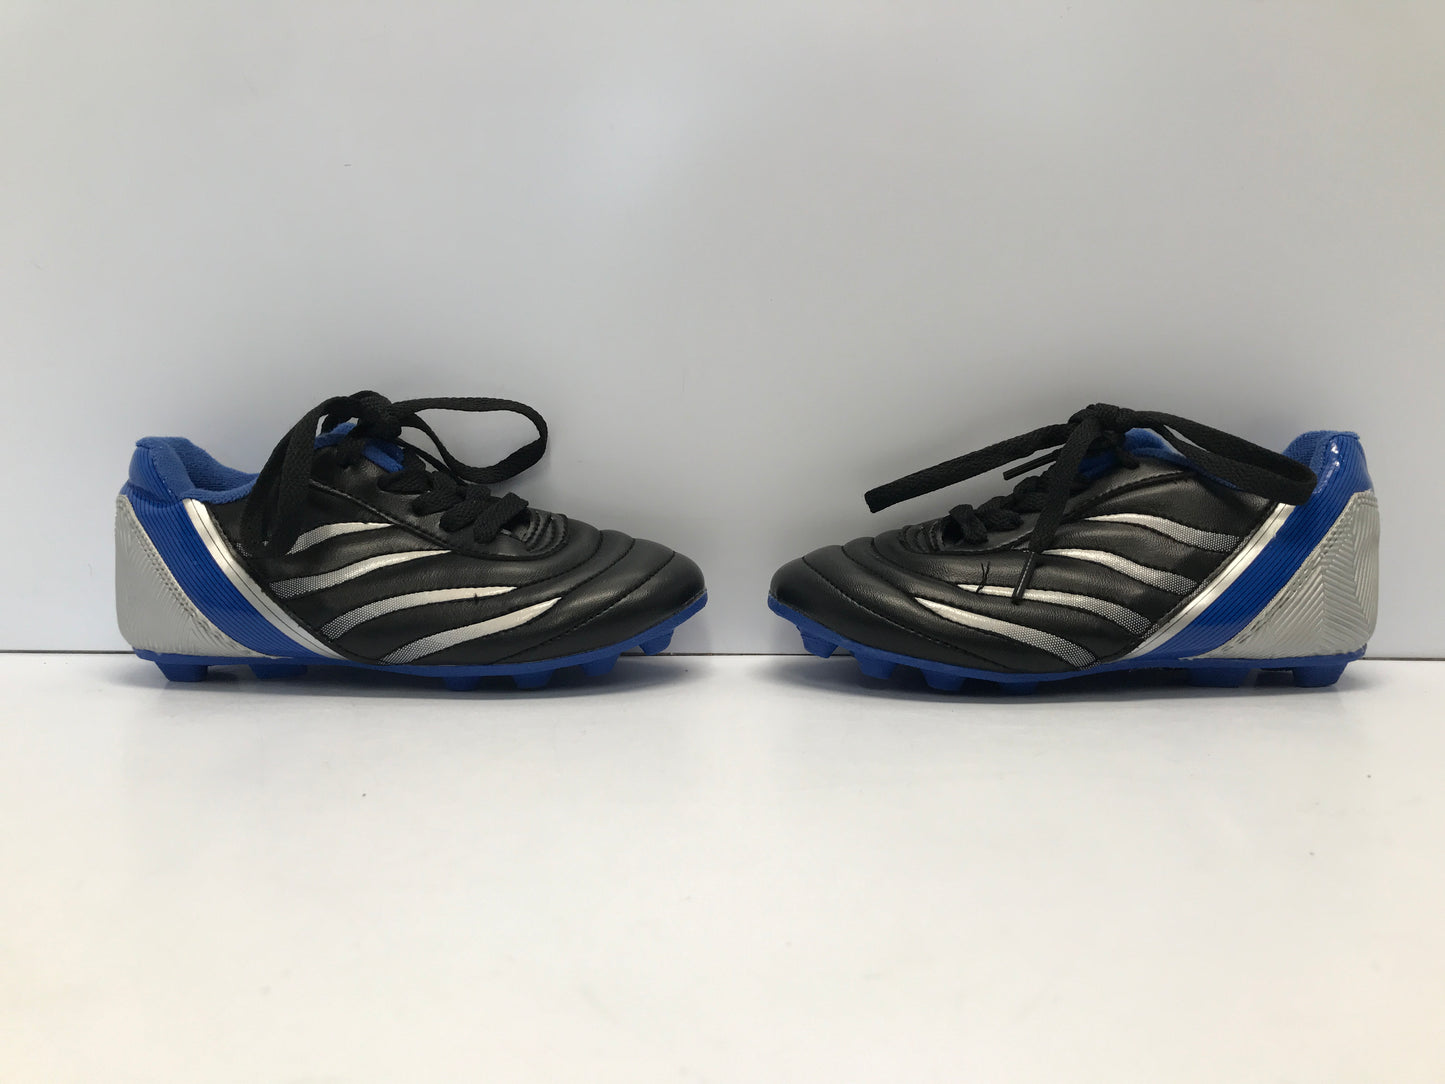 Soccer Shoes Cleats Child Size 12 Blue Black Grey Excellent